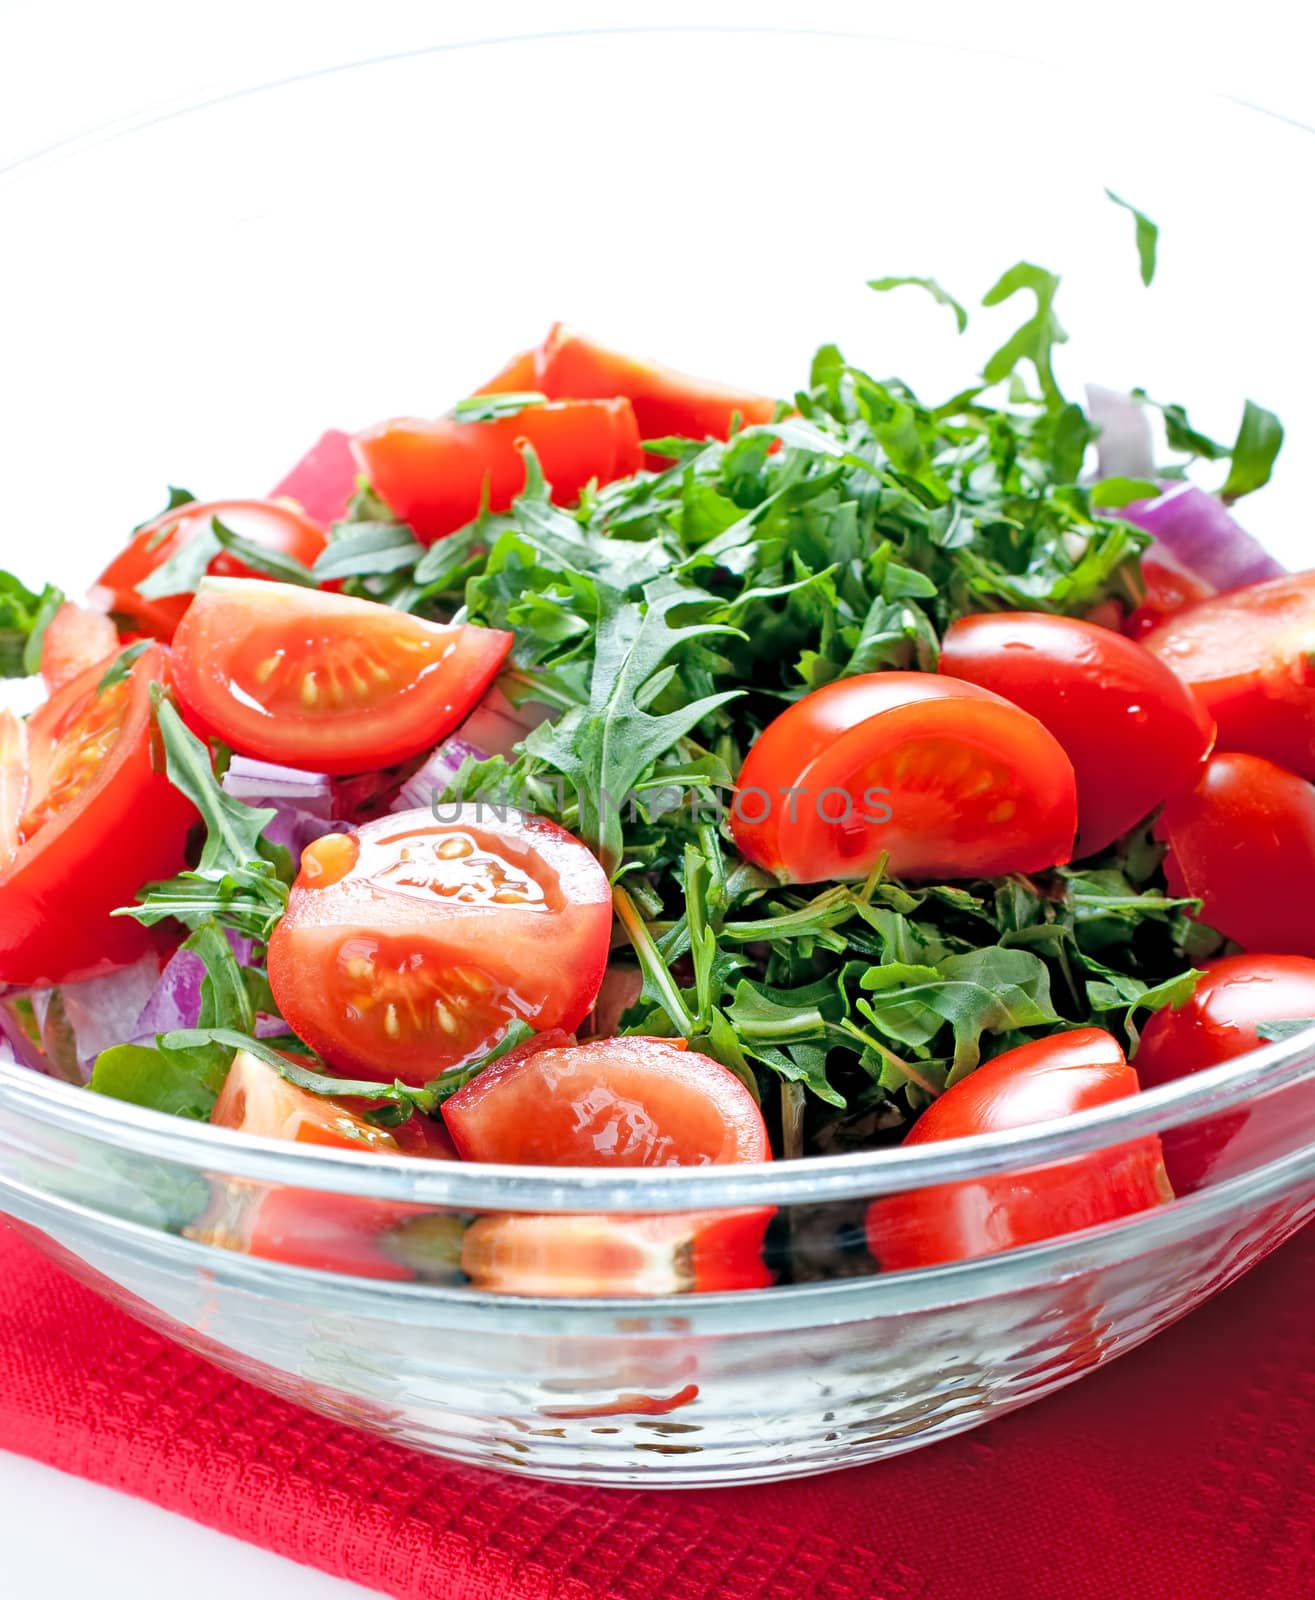 Tomato salad with ruccola and onion by Nanisimova